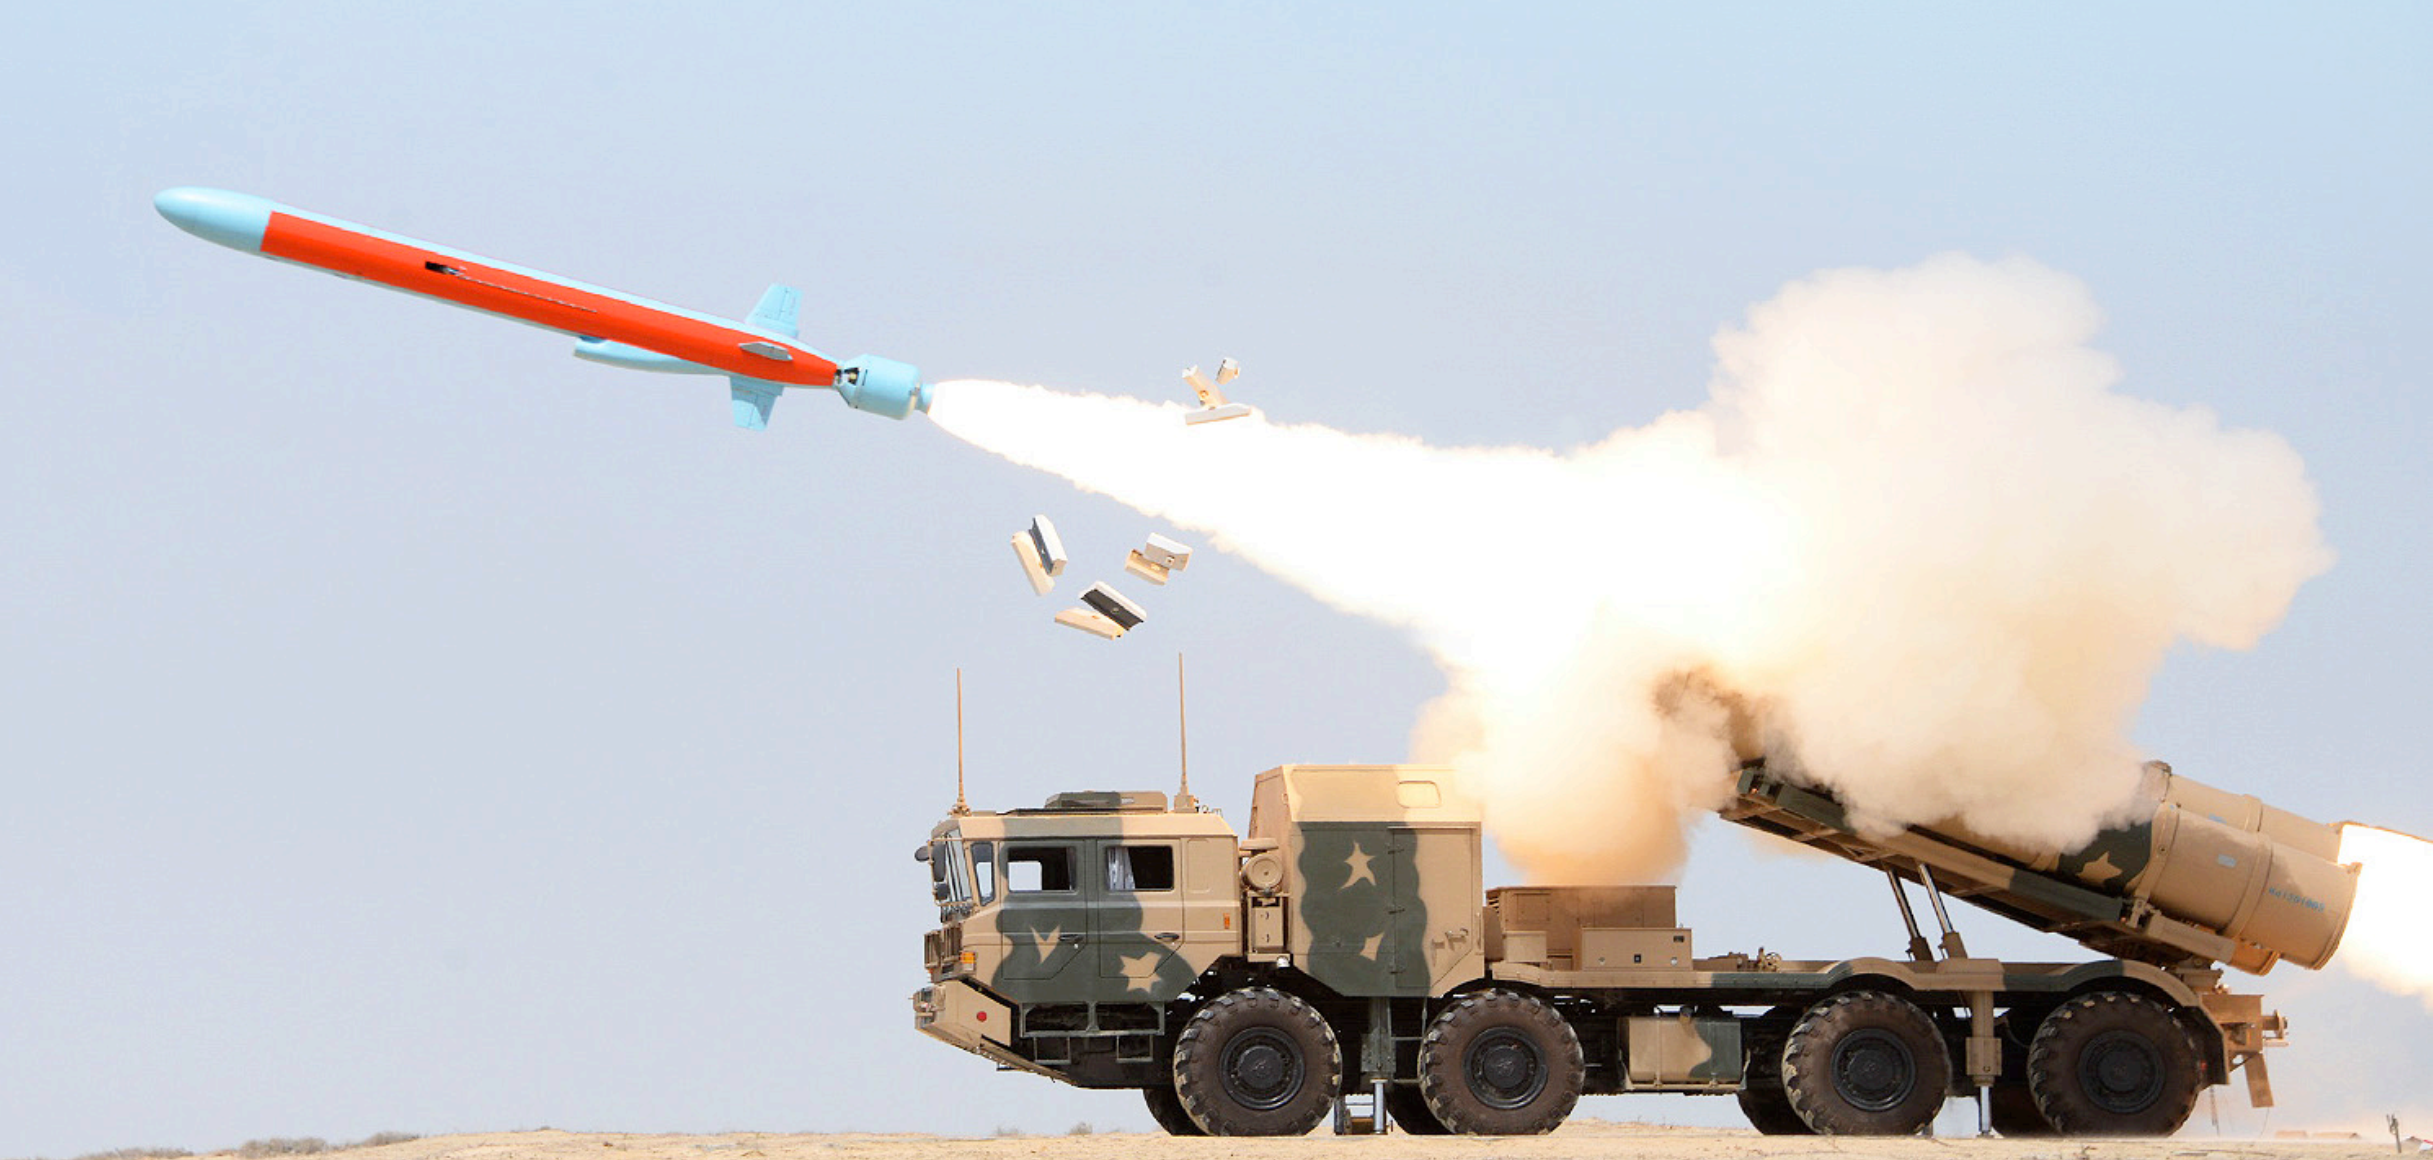 Zarb Anti-Ship Missile test firing